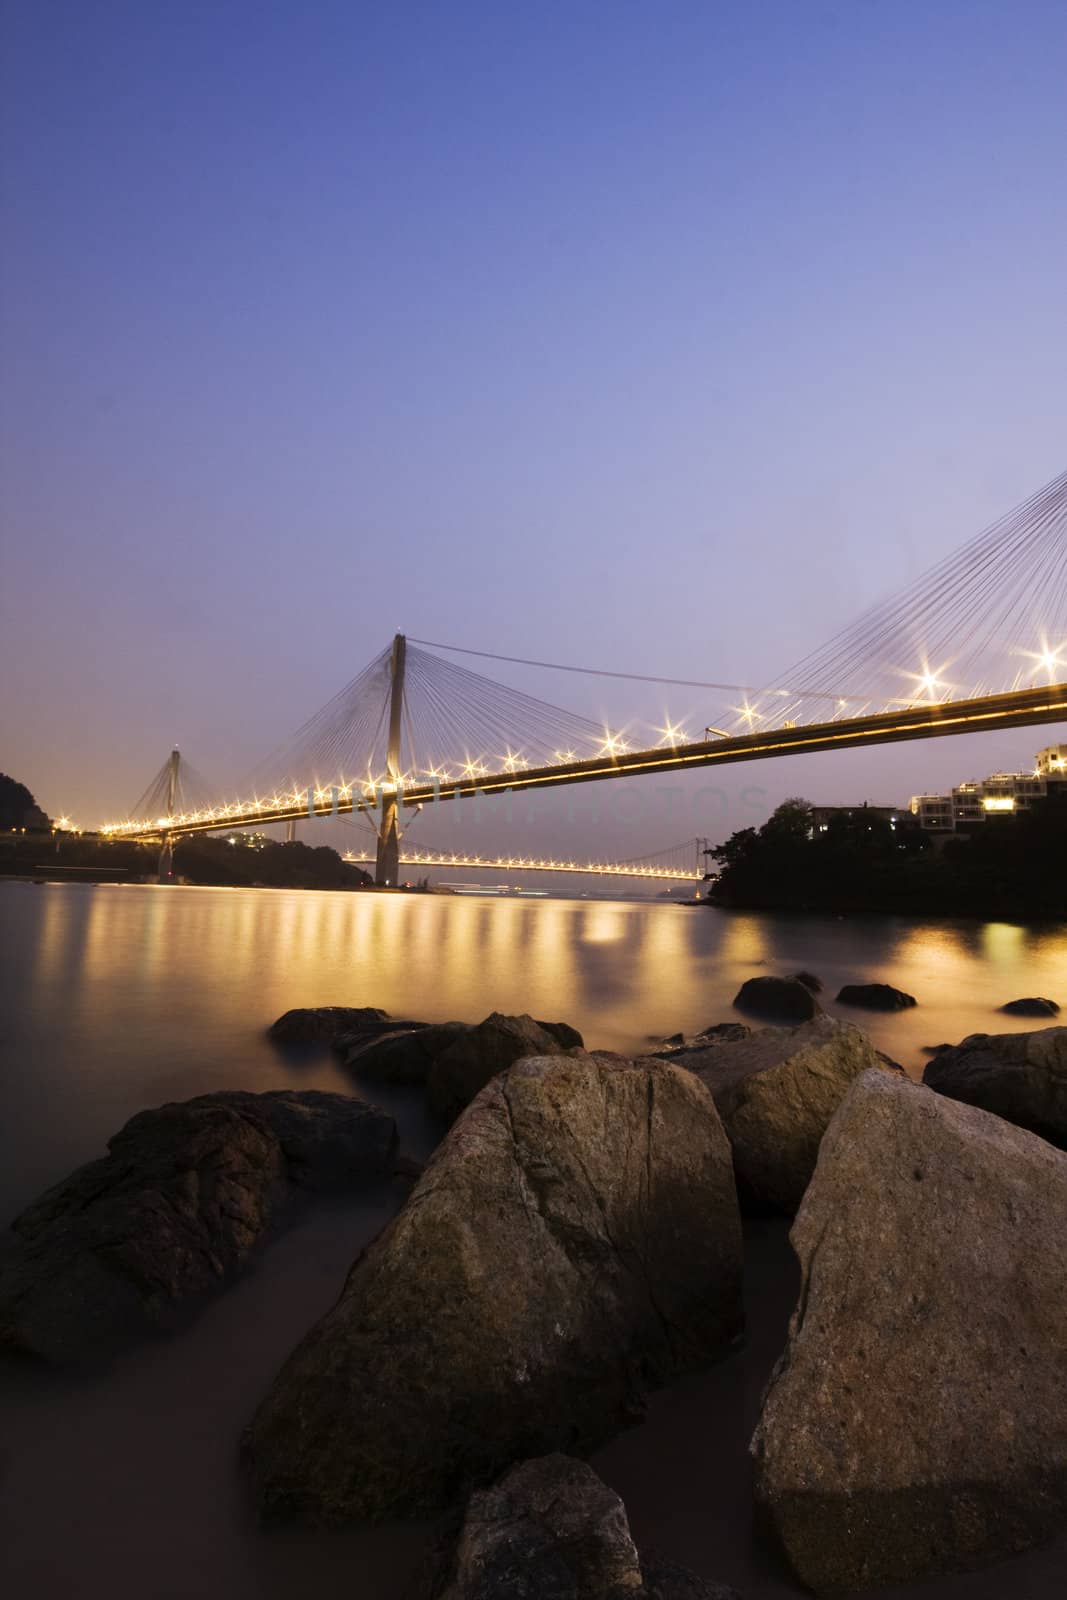 It is beautiful night scenes of Bridge in Hong Kong.